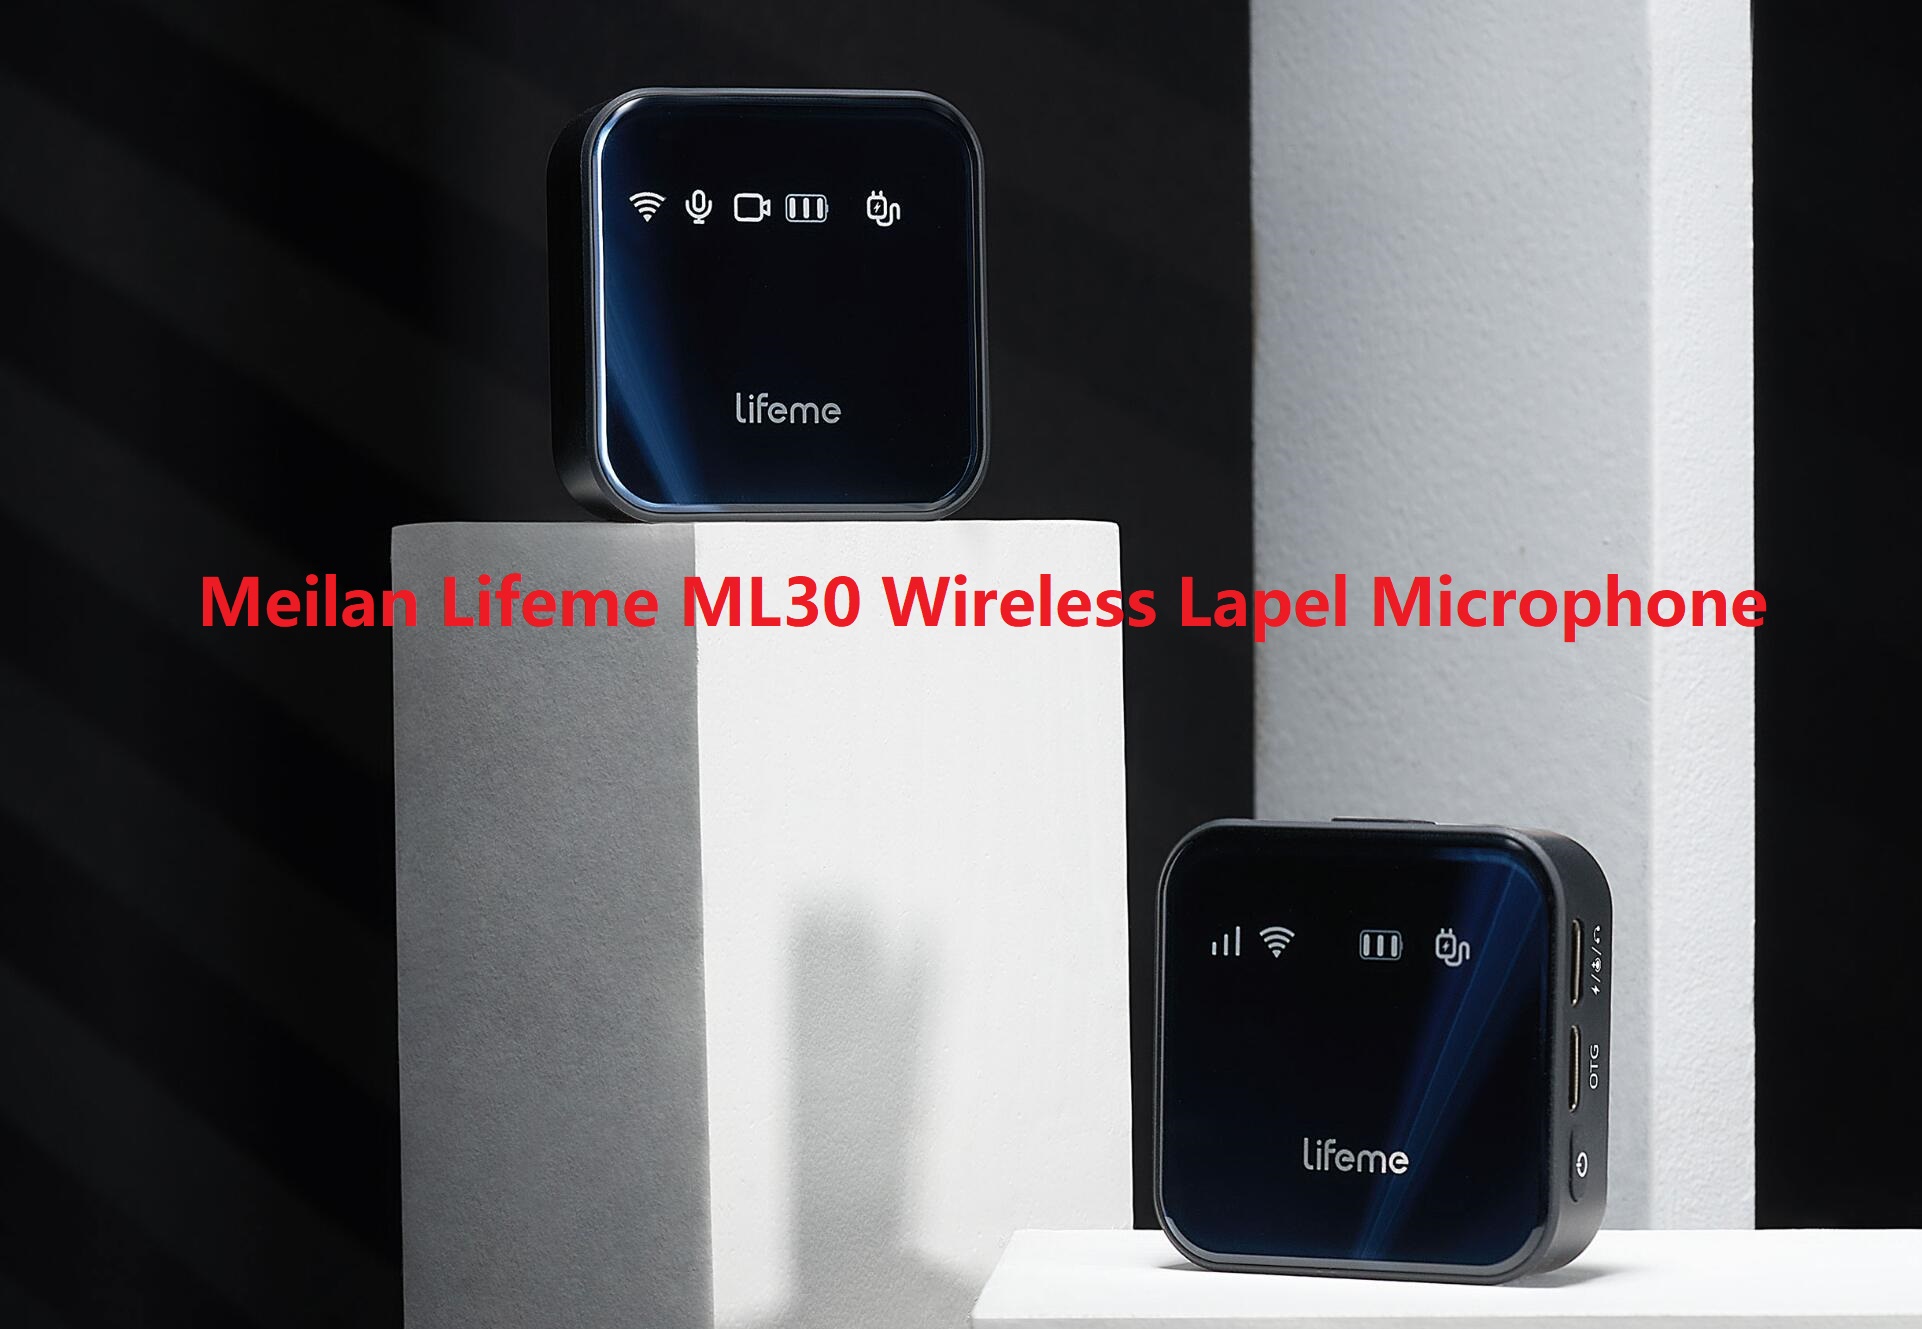 Meilan lifeme ML30 wireless lapel microphone